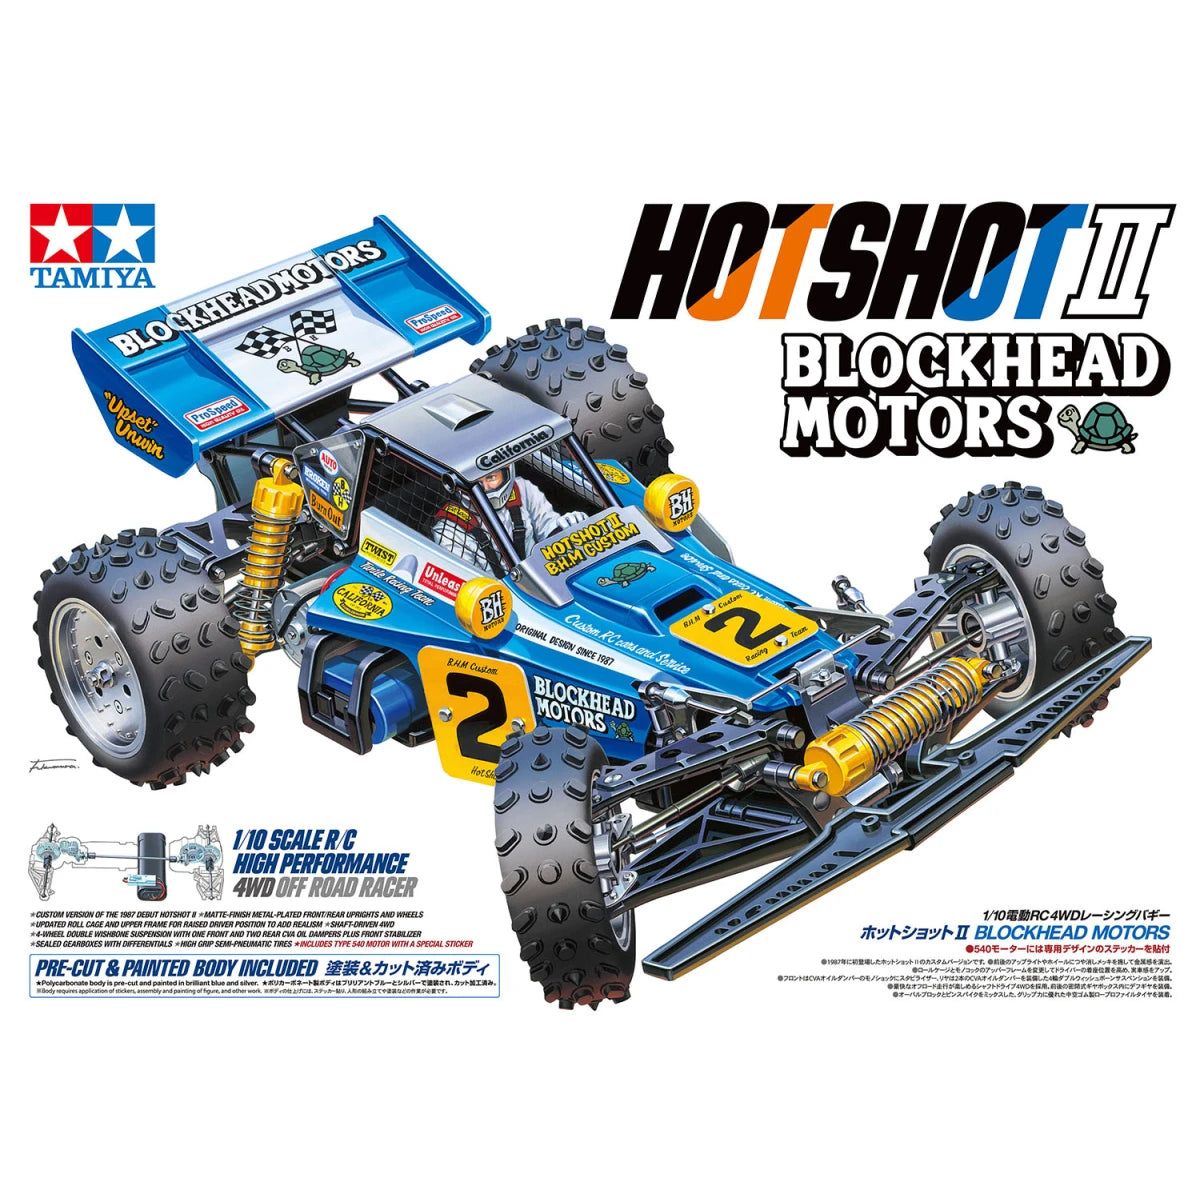 1/10 Hotshot II Blockhead Motors